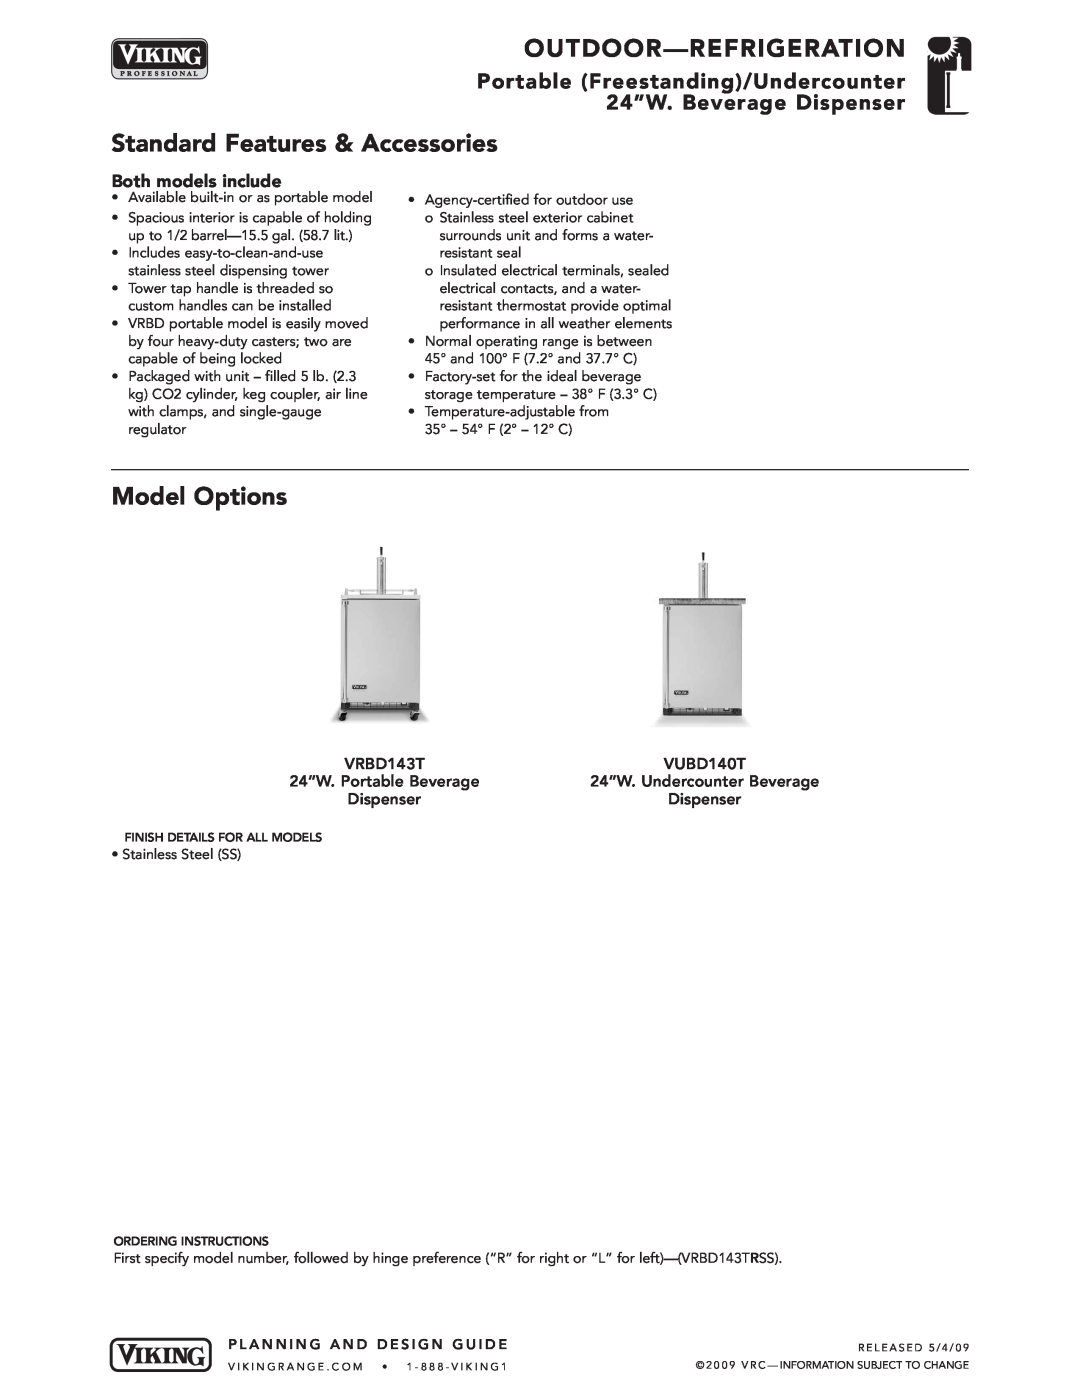 Viking VGBQ3002T1NSS Portable Freestanding/Undercounter 24”W. Beverage Dispenser, Outdoor -Refrigeration, Model Options 